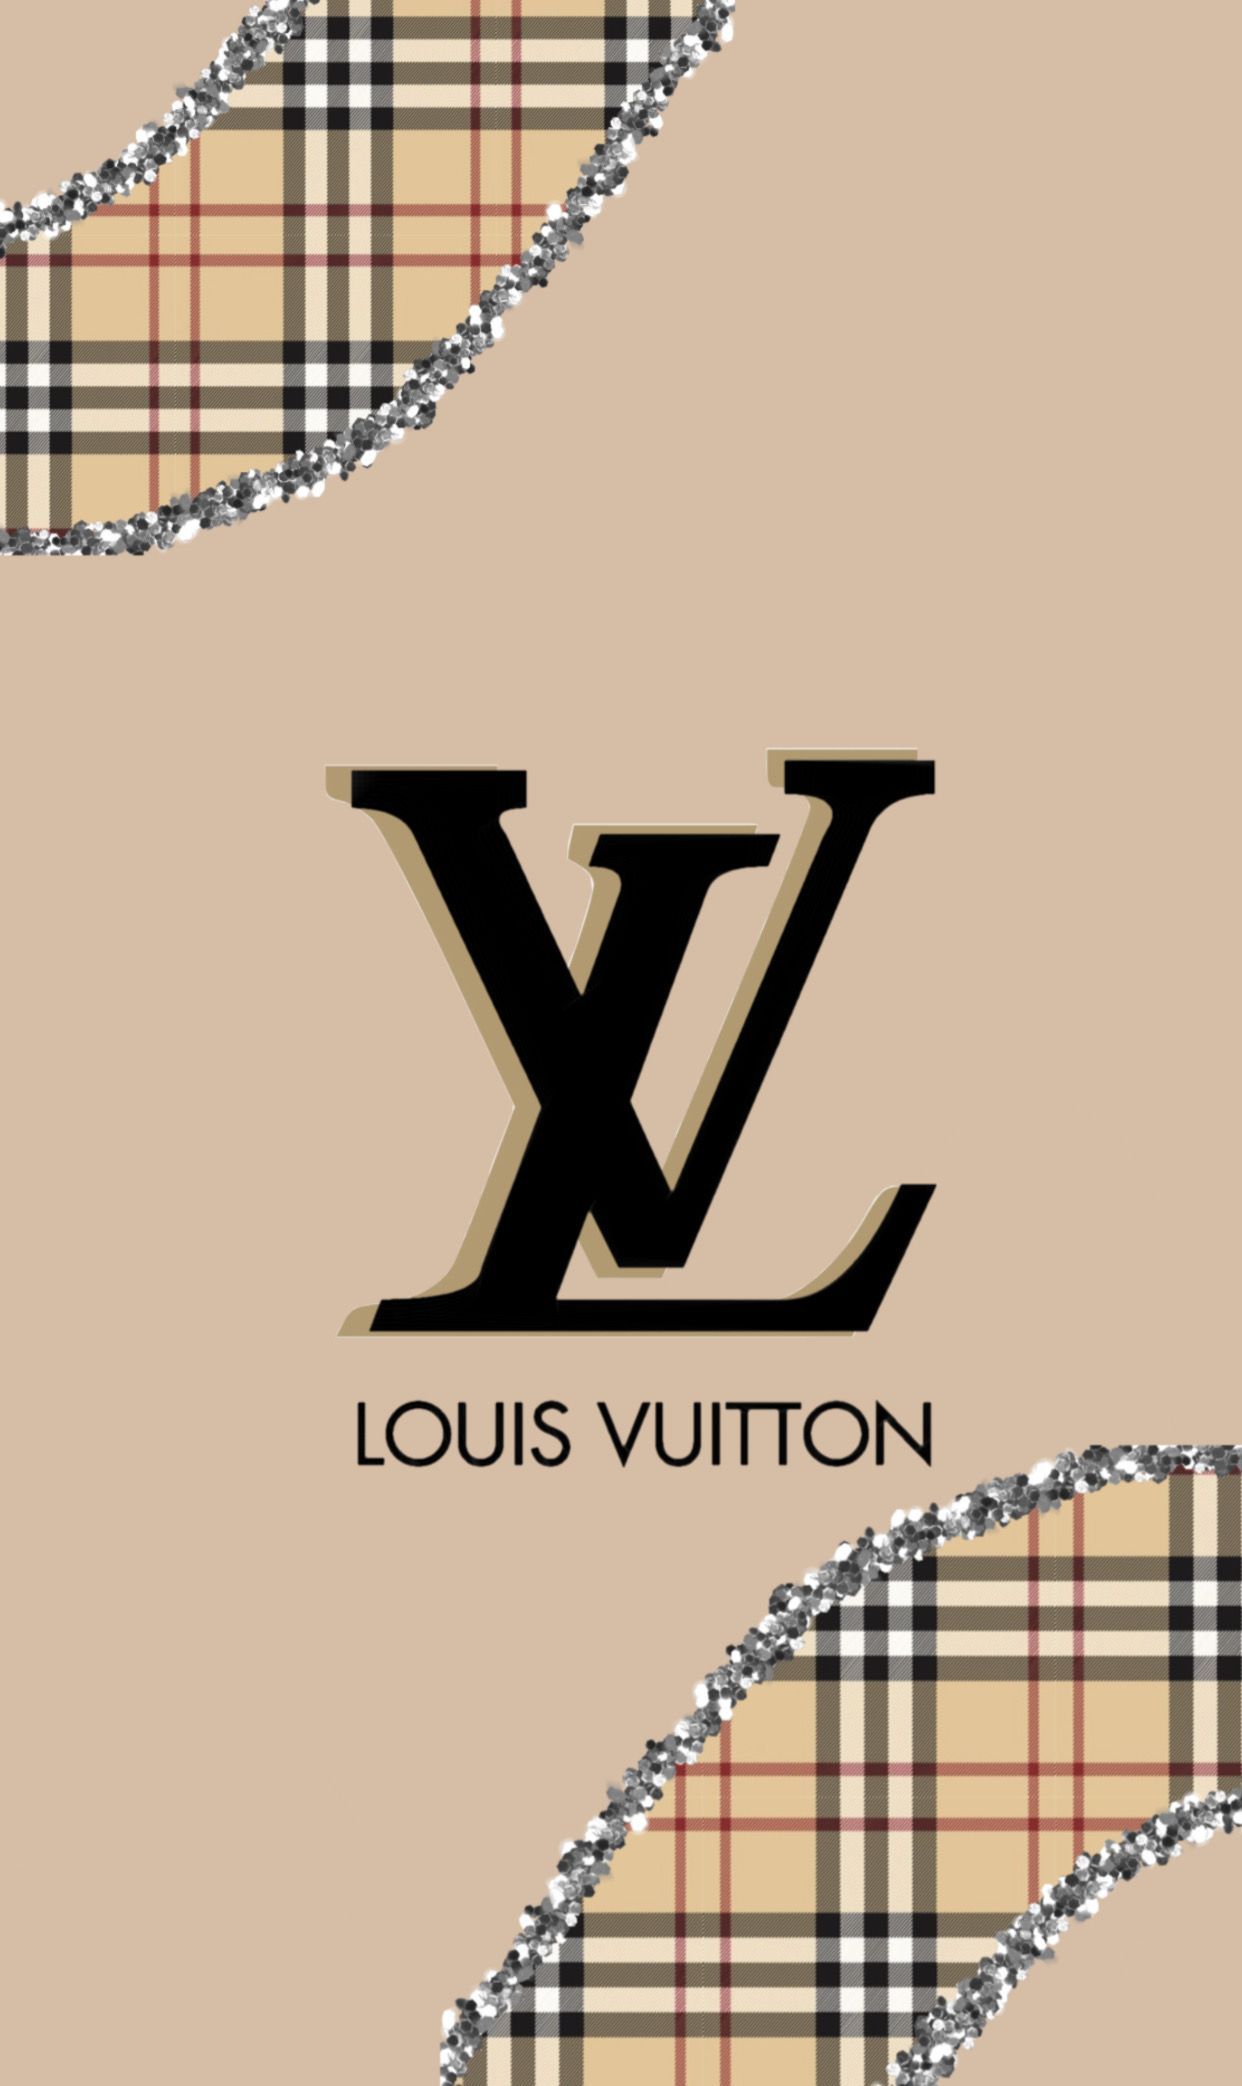 Louis vuitton logo wallpaper for your phone - Louis Vuitton